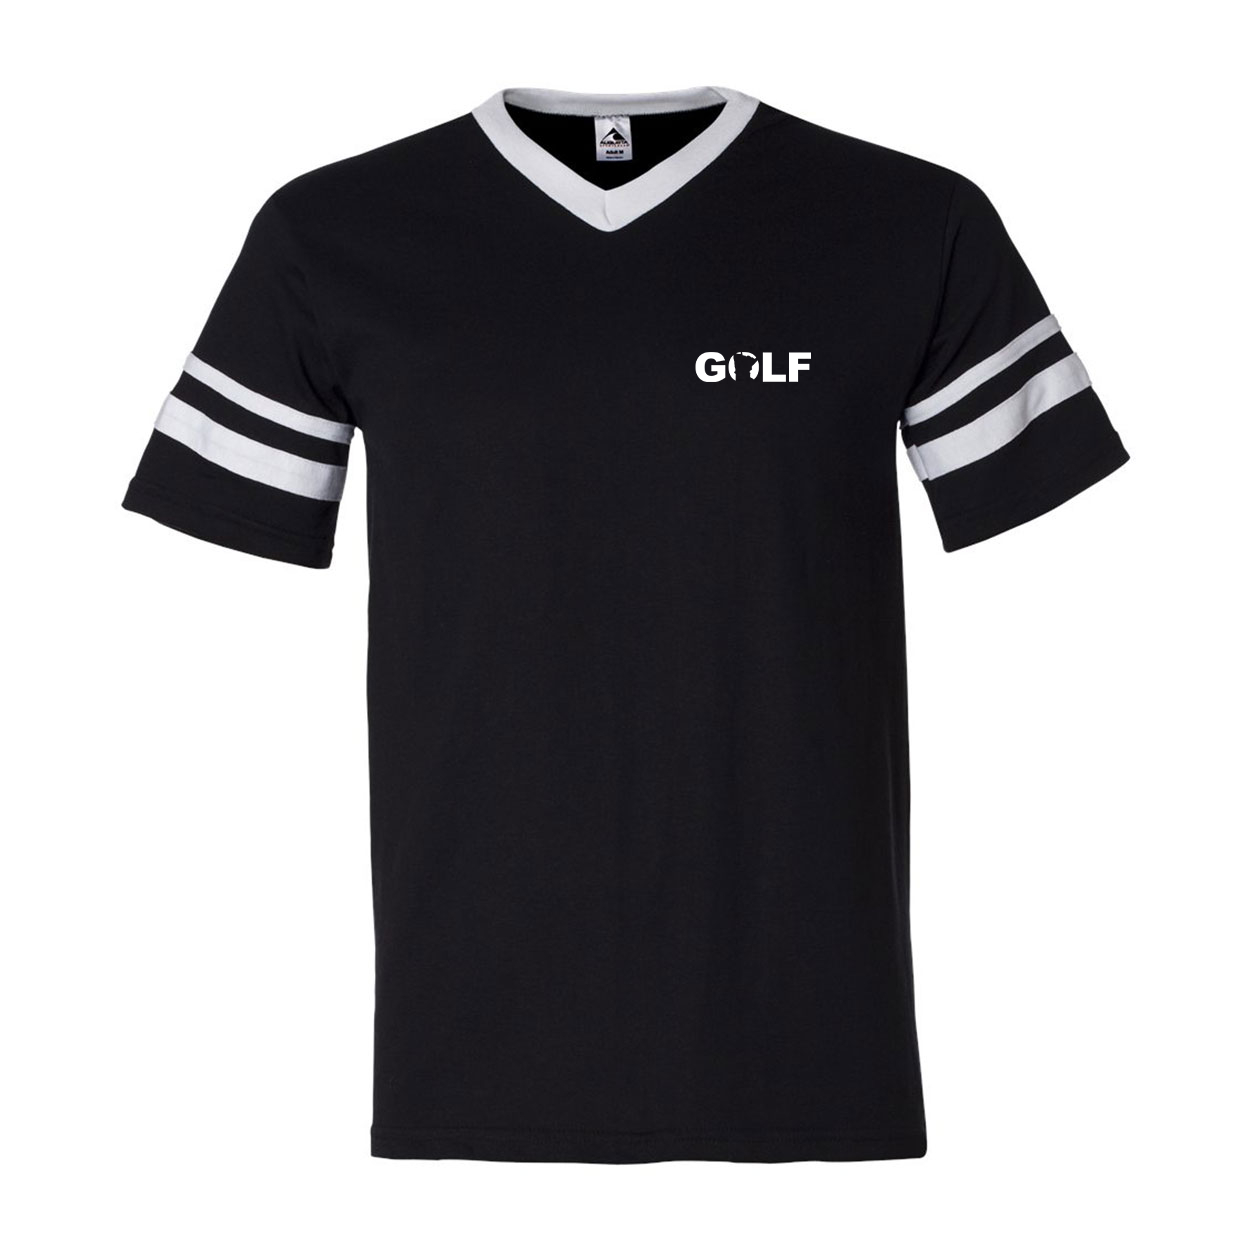 Golf Minnesota Night Out Premium Striped Jersey T-Shirt Black/White (White Logo)